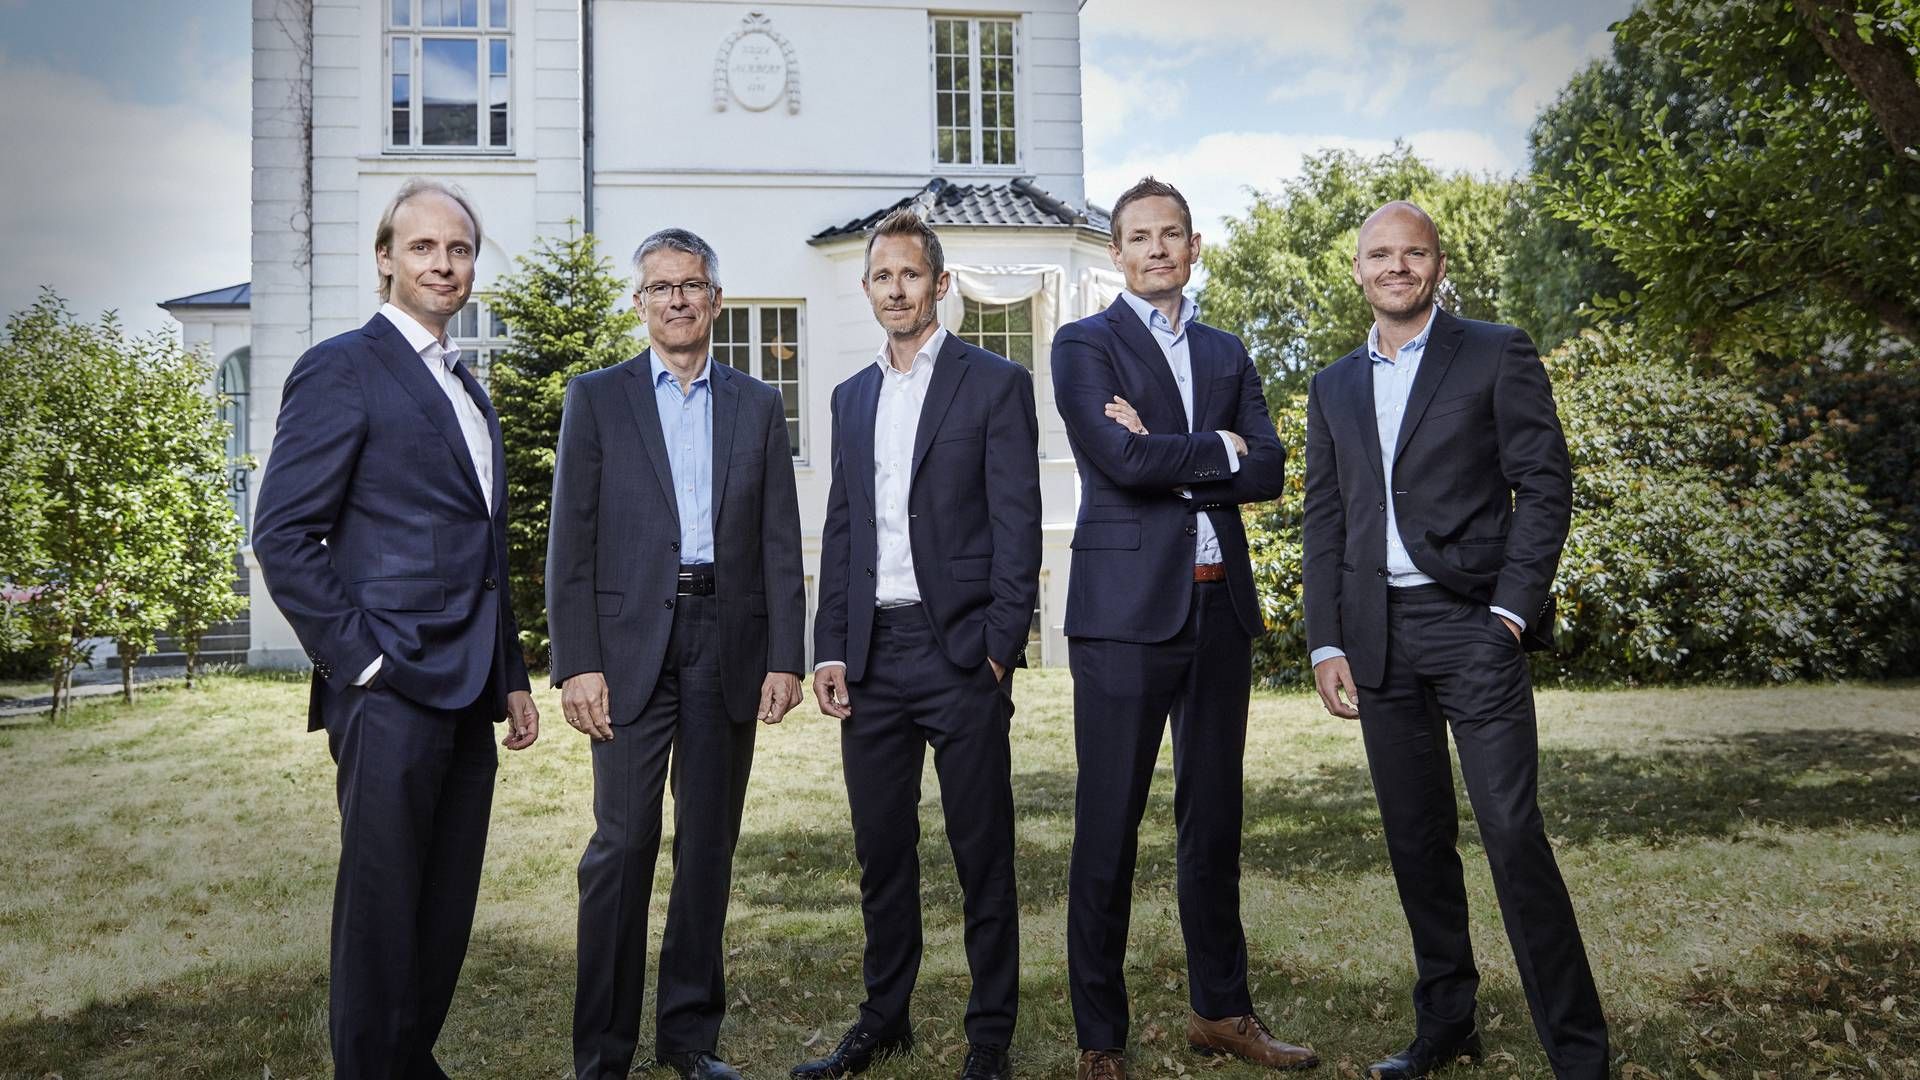 The partners at Nordic Alpha Partners (l-r): Jakob Fuhr Hansen, Ulrik Jørring, Rasmus Lund, Laurits Bach Sørensen and Troels Øberg | Photo: Nordic Alpha Partners/PR